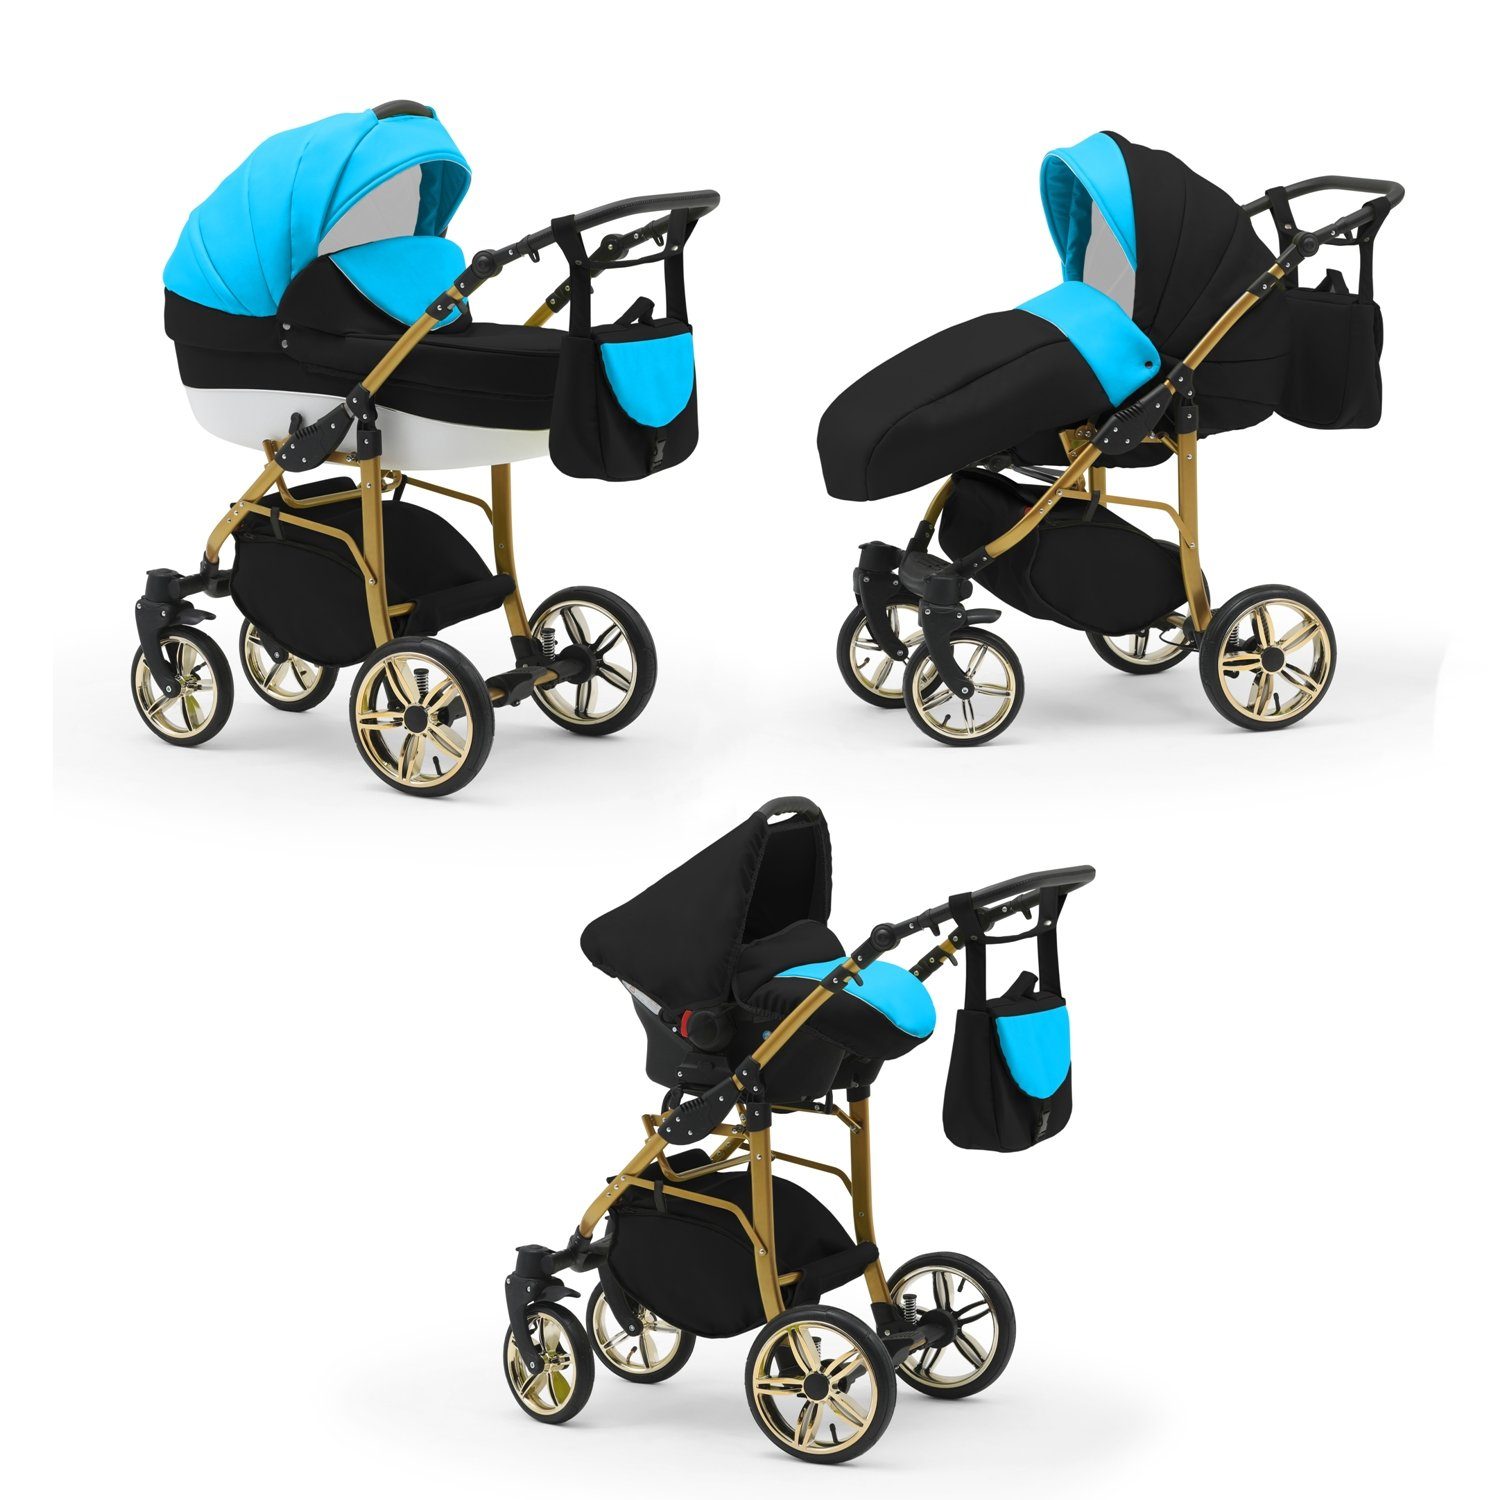 babies-on-wheels Kombi-Kinderwagen Schwarz-Türkis-Weiß 46 Gold- Farben - Teile Kinderwagen-Set in in 1 3 16 Cosmo